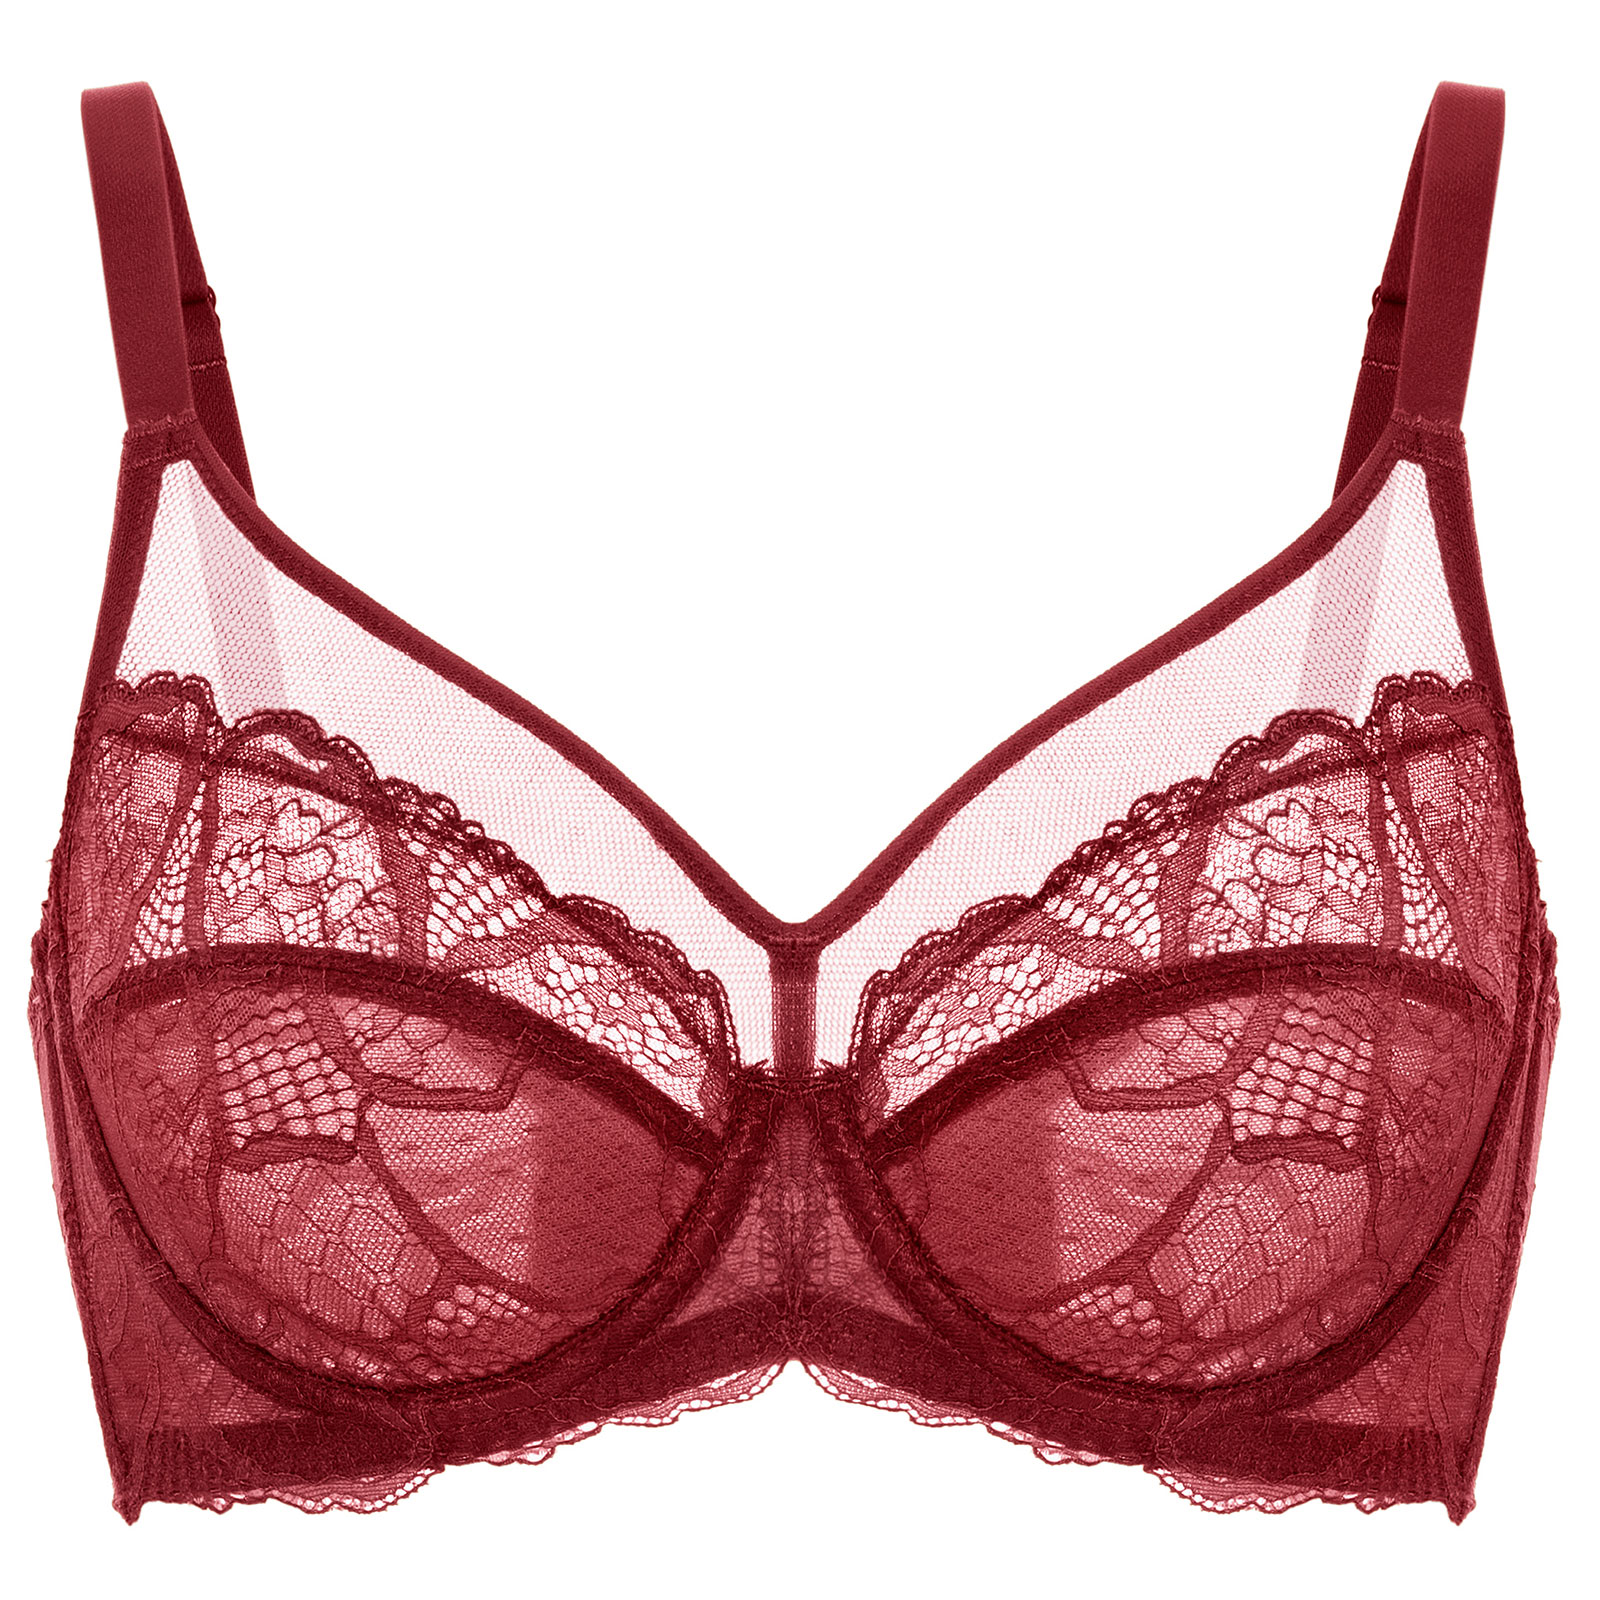 Entyinea Womens Satin Minimizer Bra Fashion Lace Unlined Underwire Bra Red  44